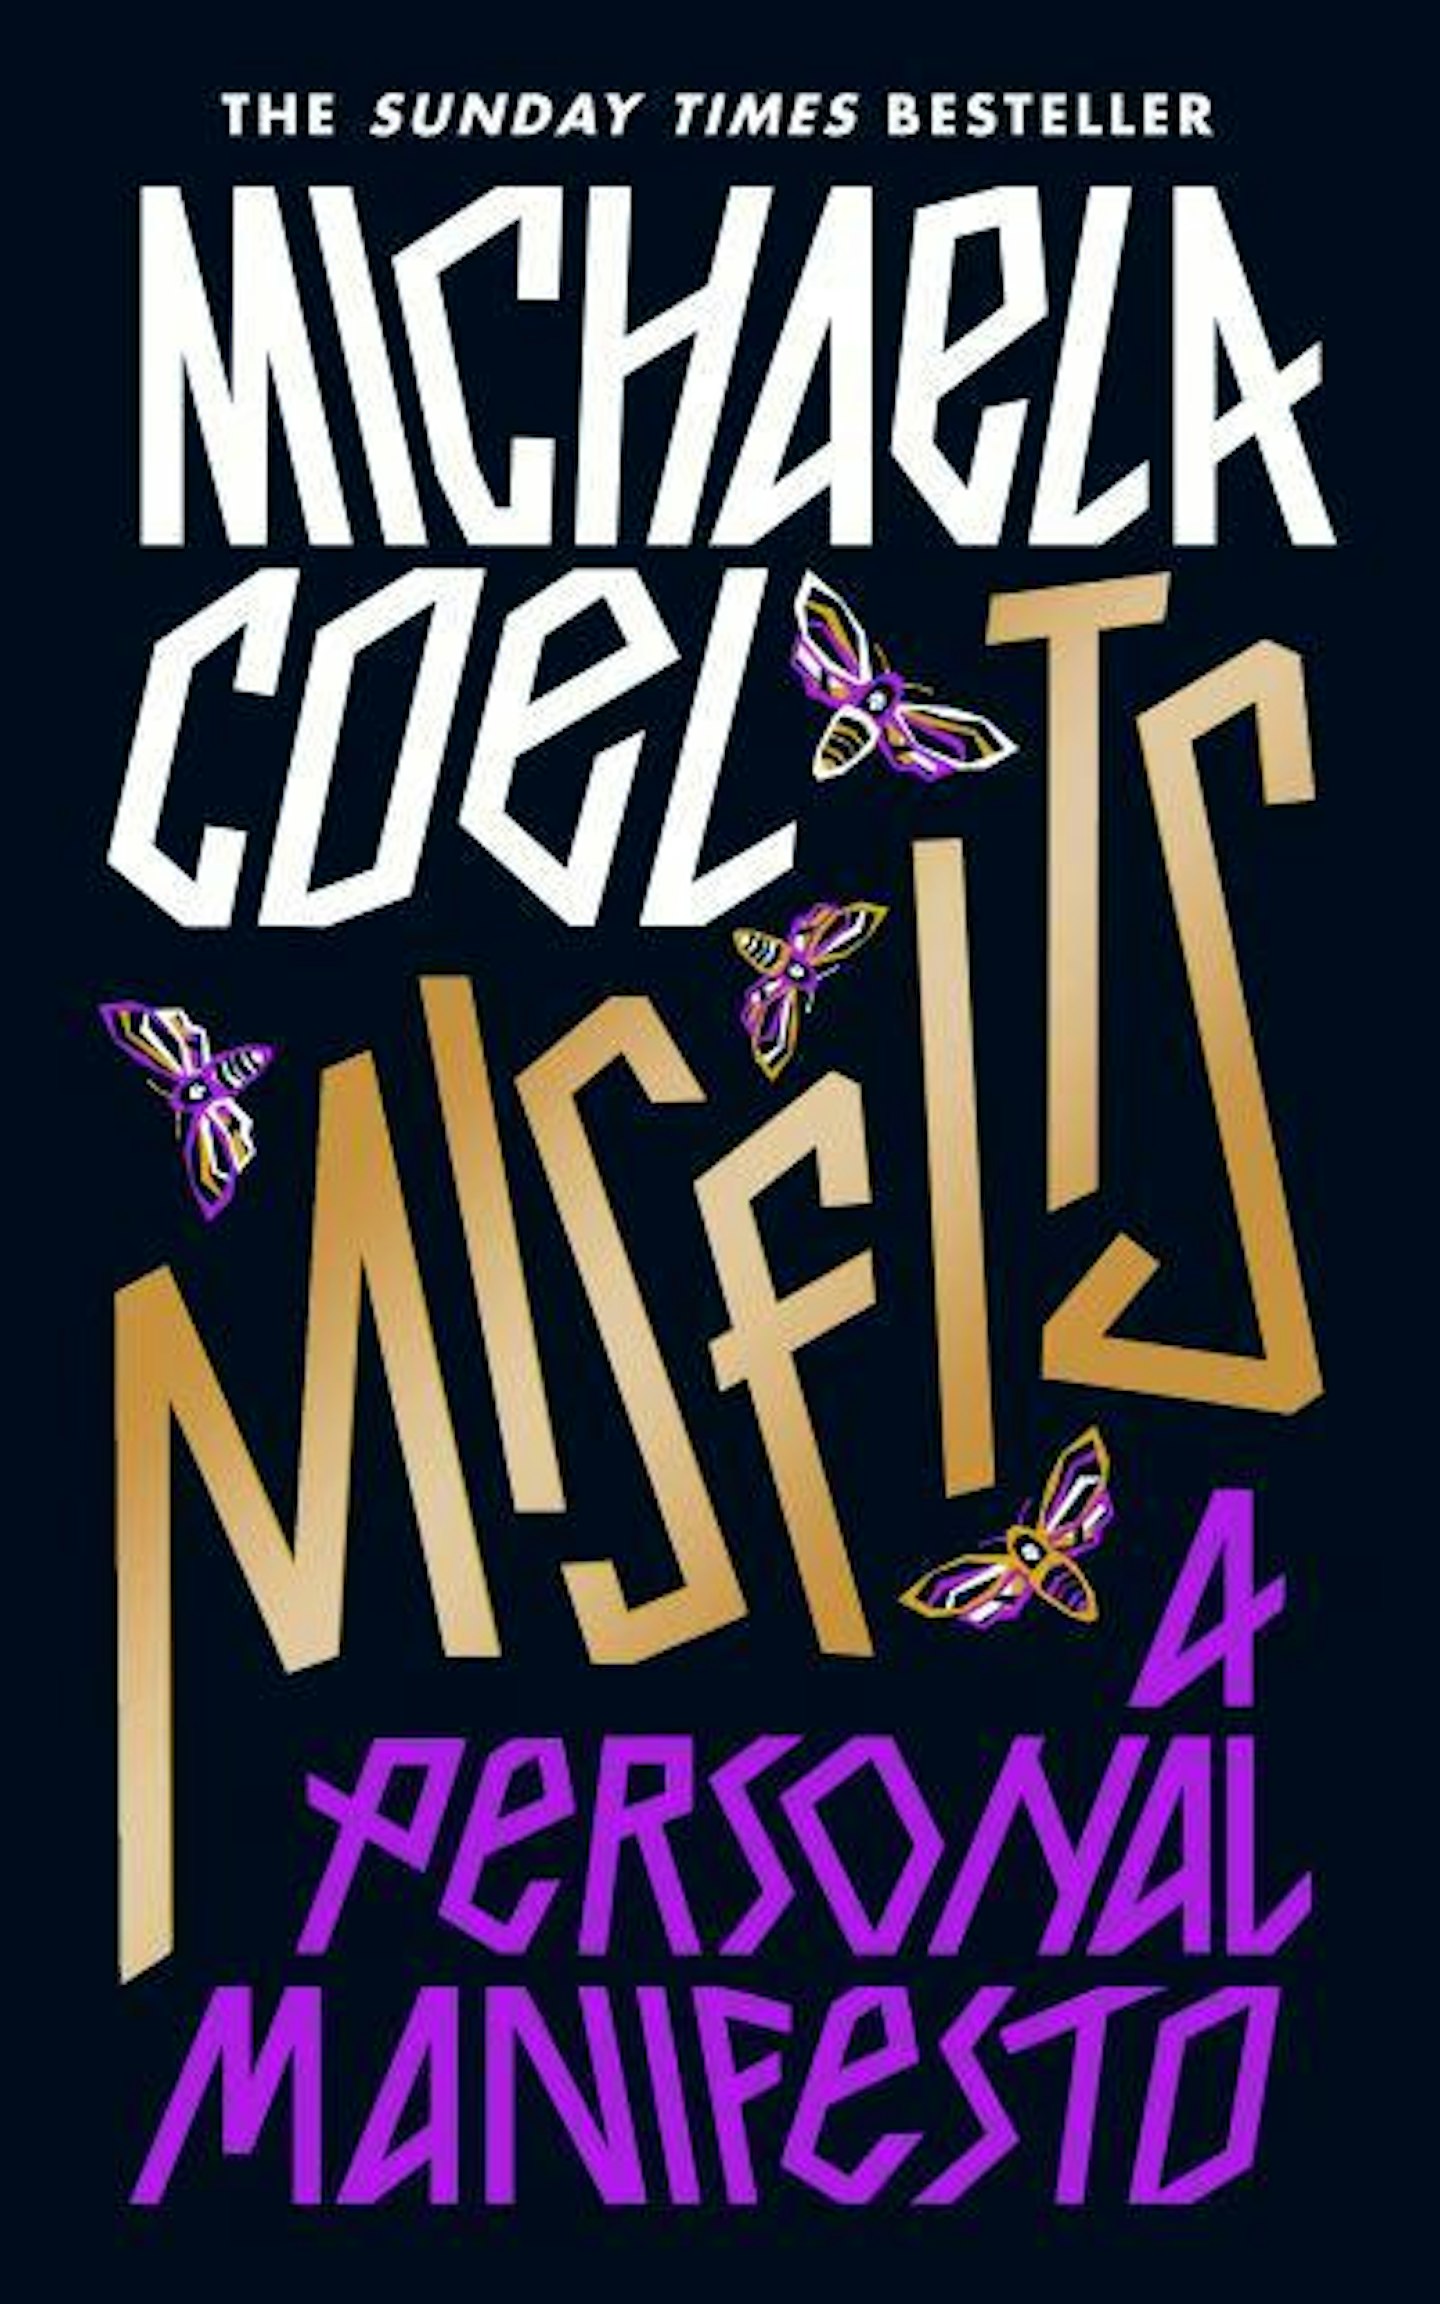 Michaela Coel, Misfits: A Personal Manifesto, £7.99